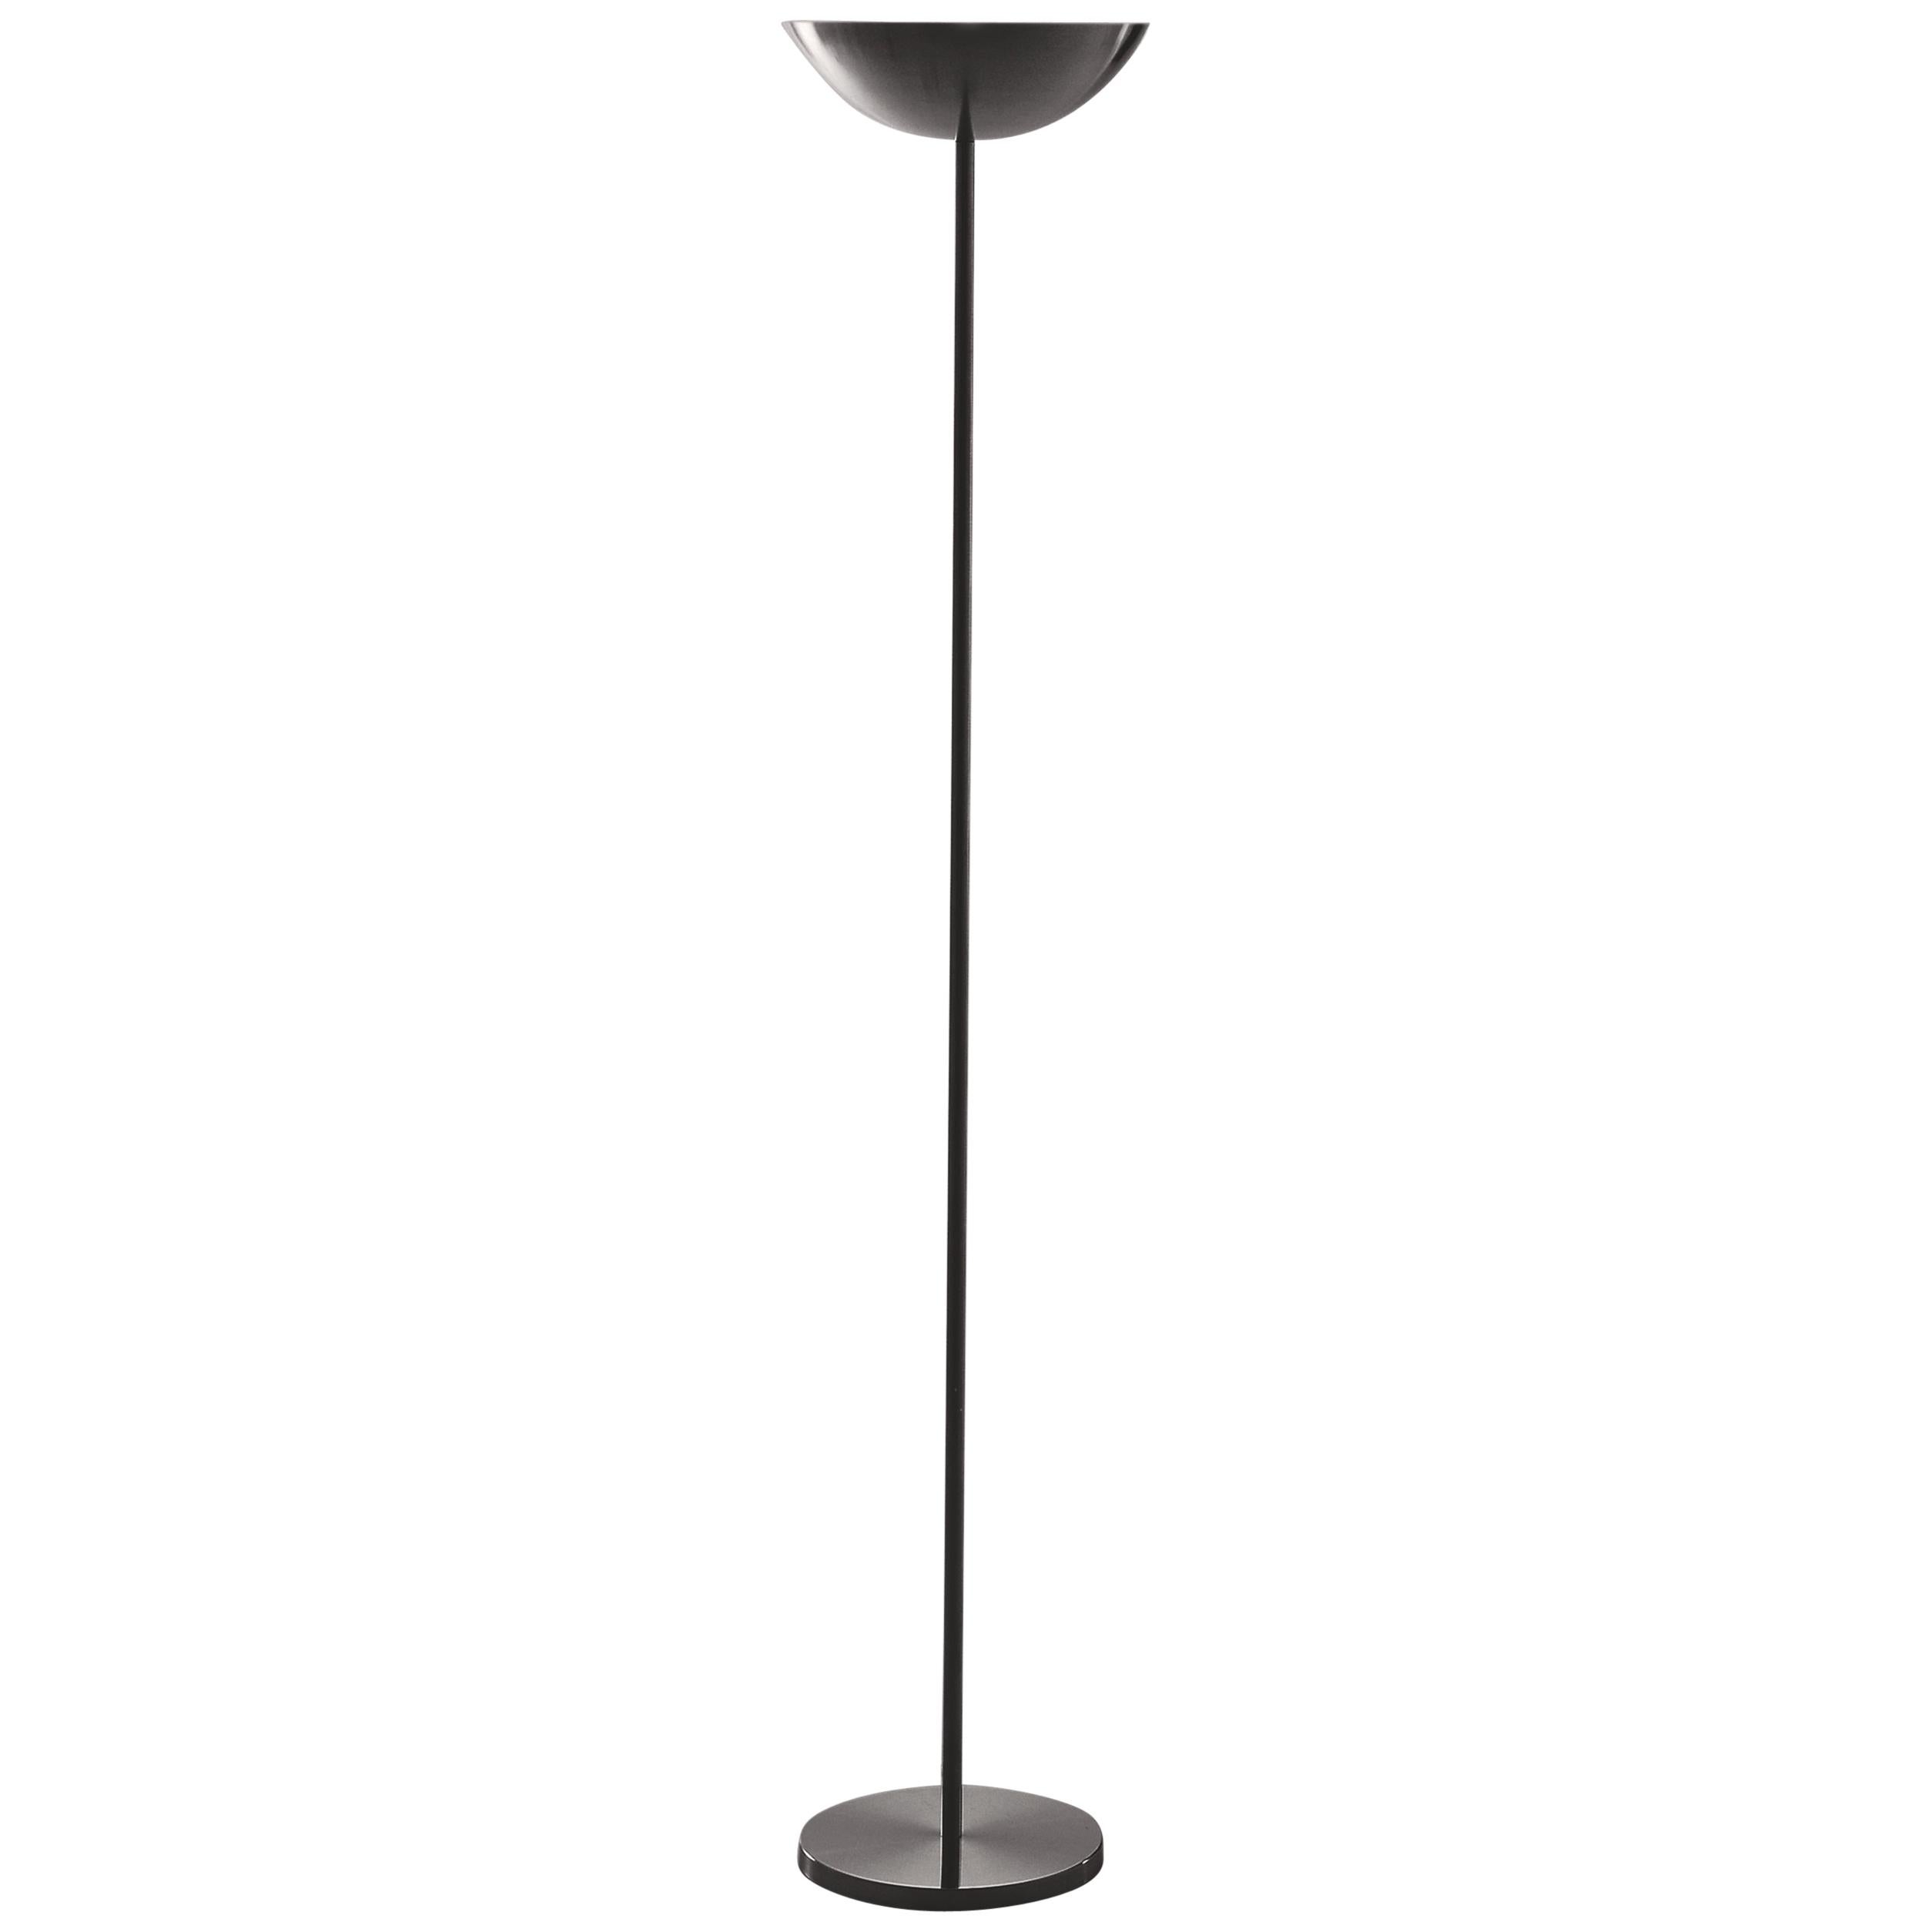 Martinelli Luce V.D.L 2234 Floor Lamp by Richard Neutra